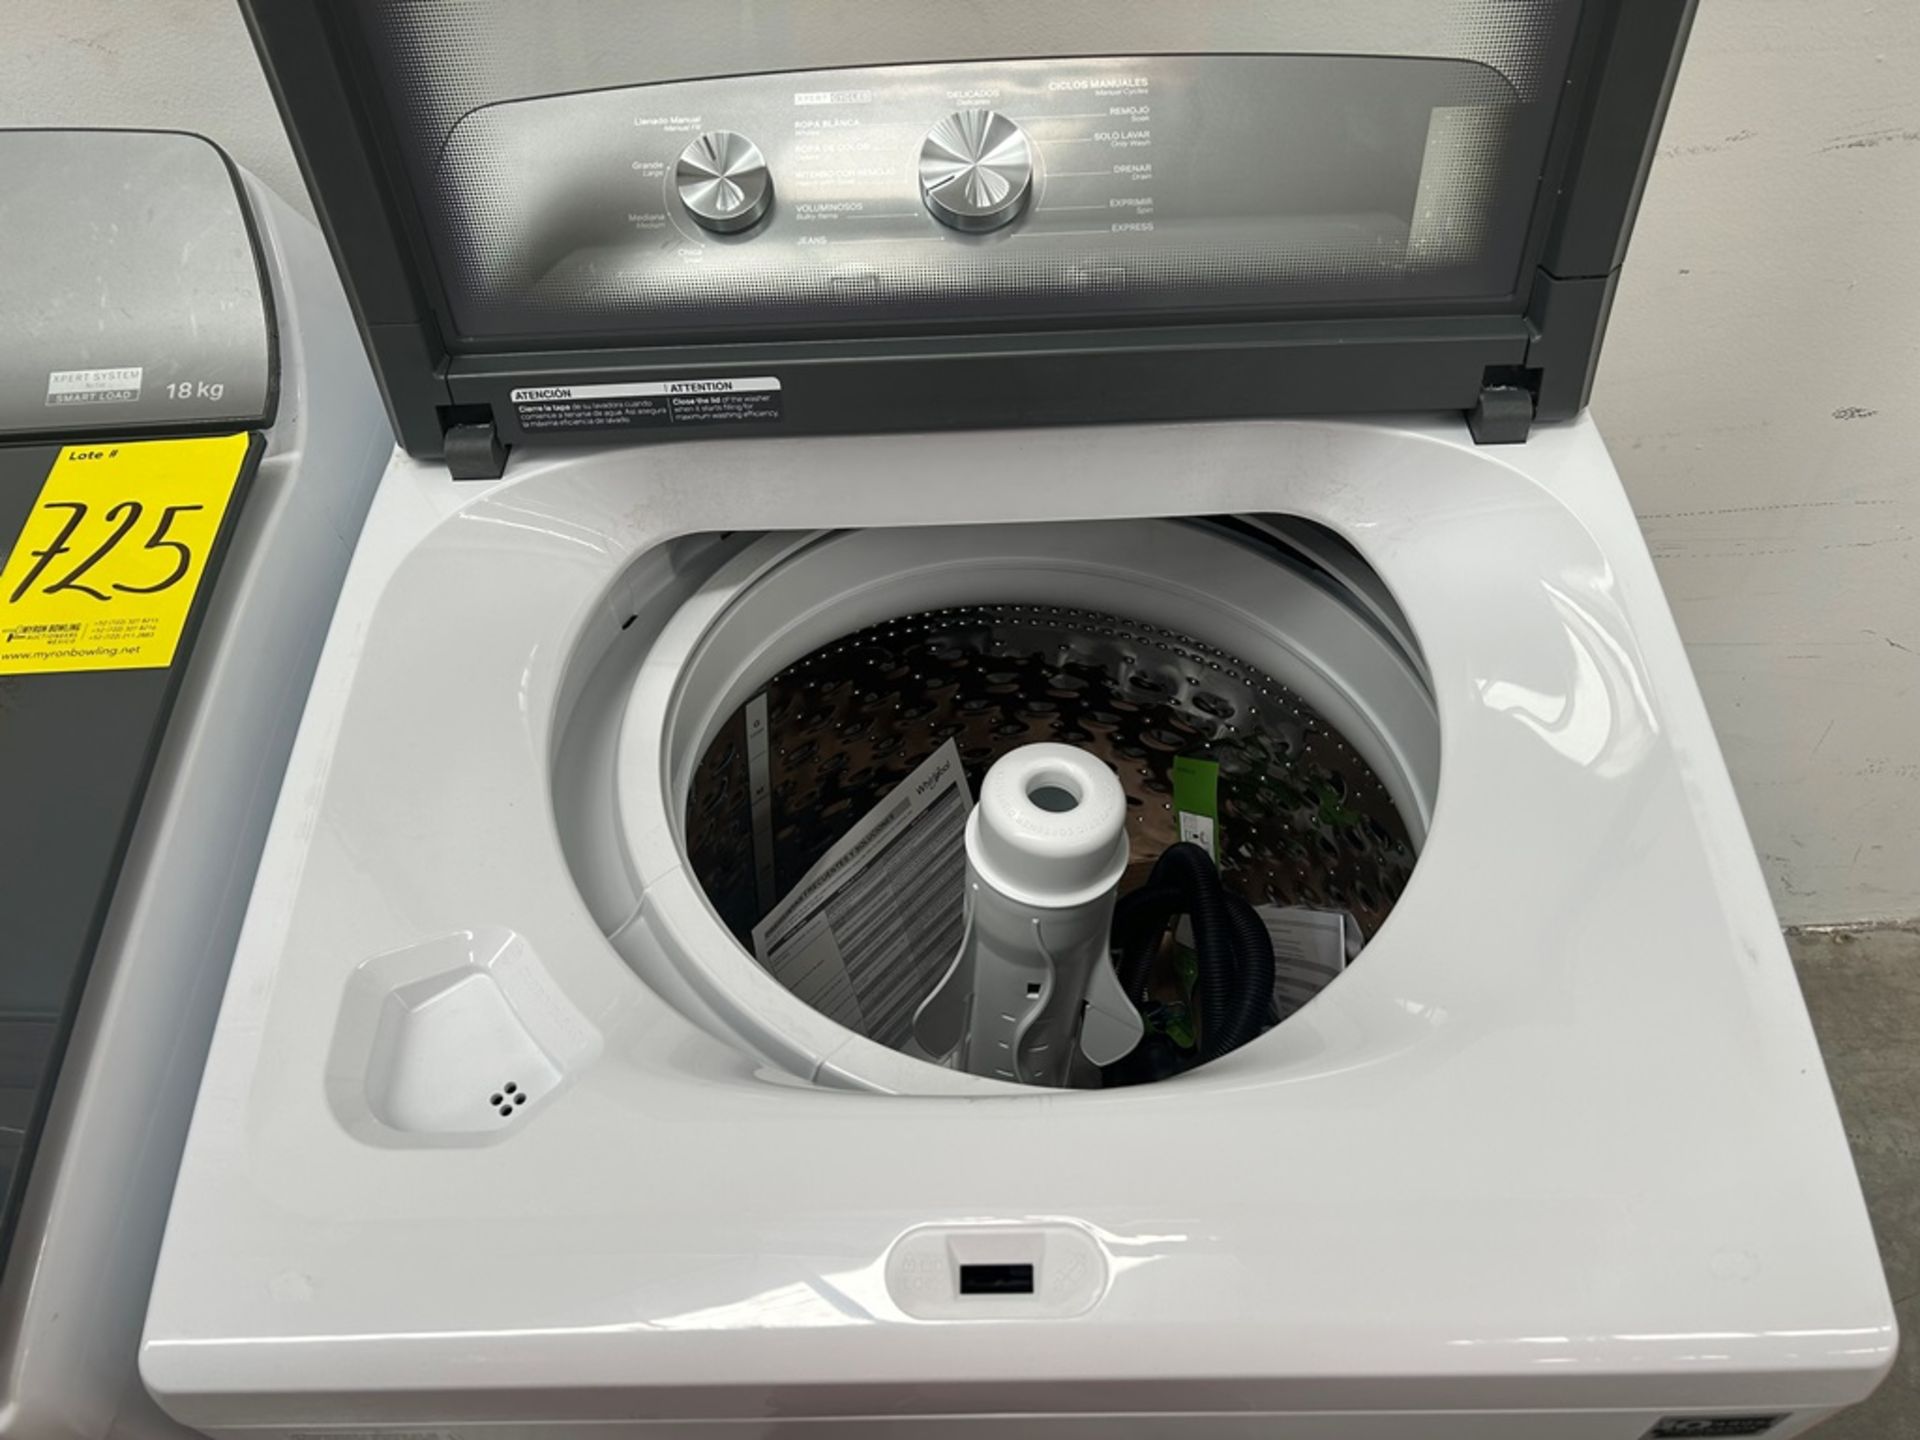 Lote de 2 lavadoras contiene: 1 Lavadora de 18 KG, Marca WHIRPOOL, Modelo 8MWTW1812WPM0, Serie 7433 - Image 7 of 10